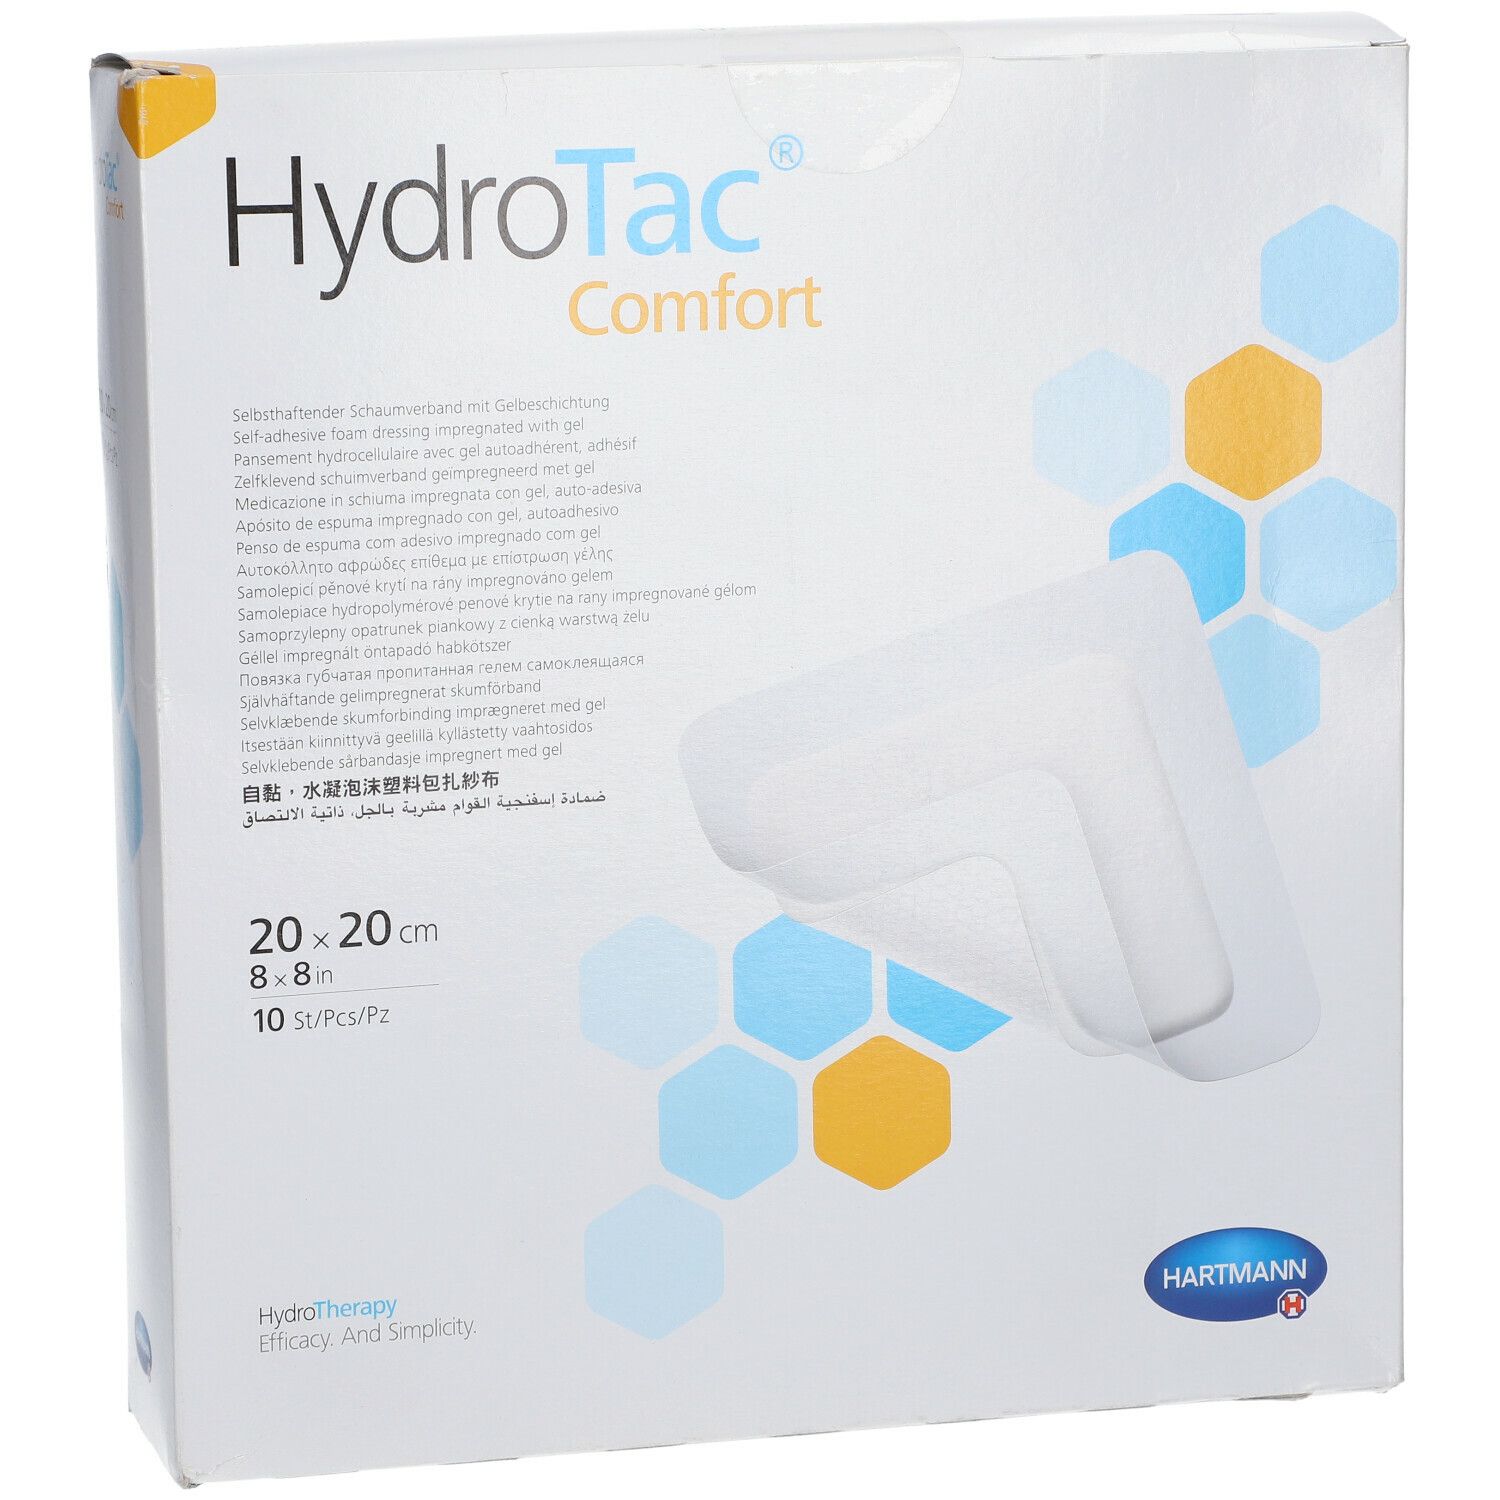 HydroTac® comfort Schaumverband 20 x 20 cm